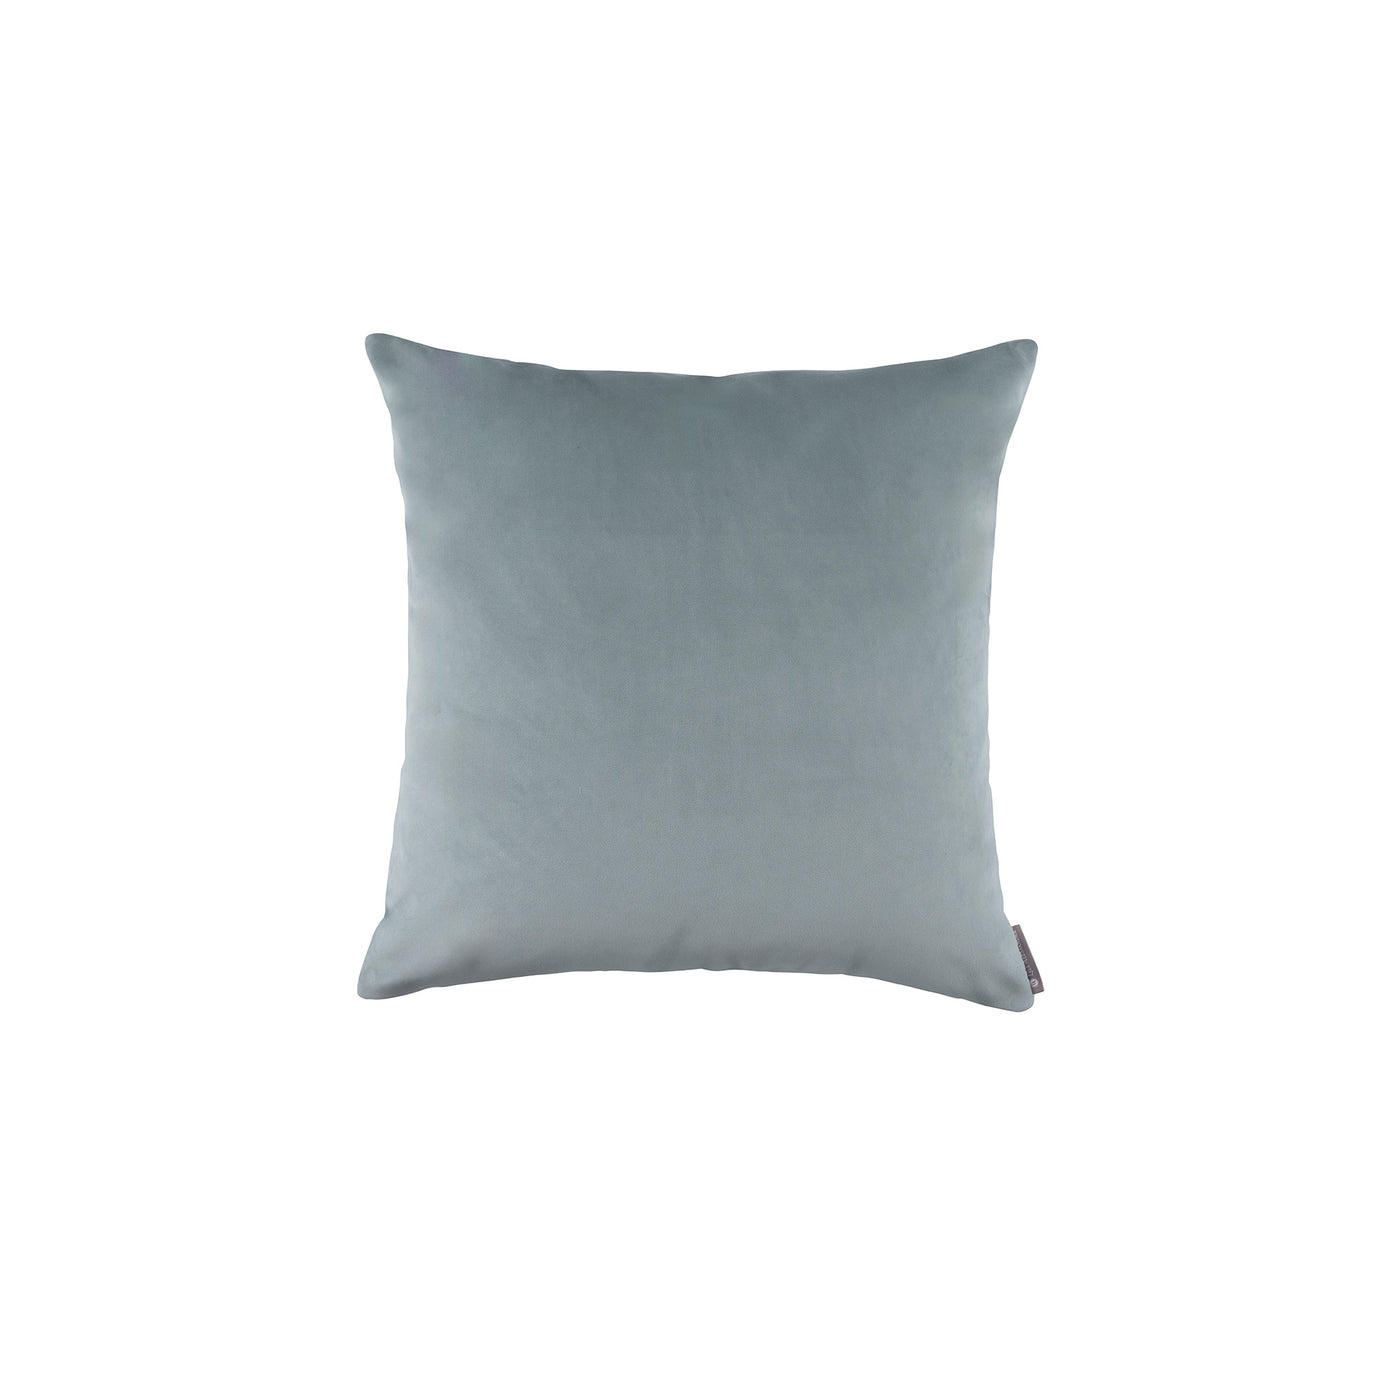 Vivid Mist Small Square Pillow (22x22)